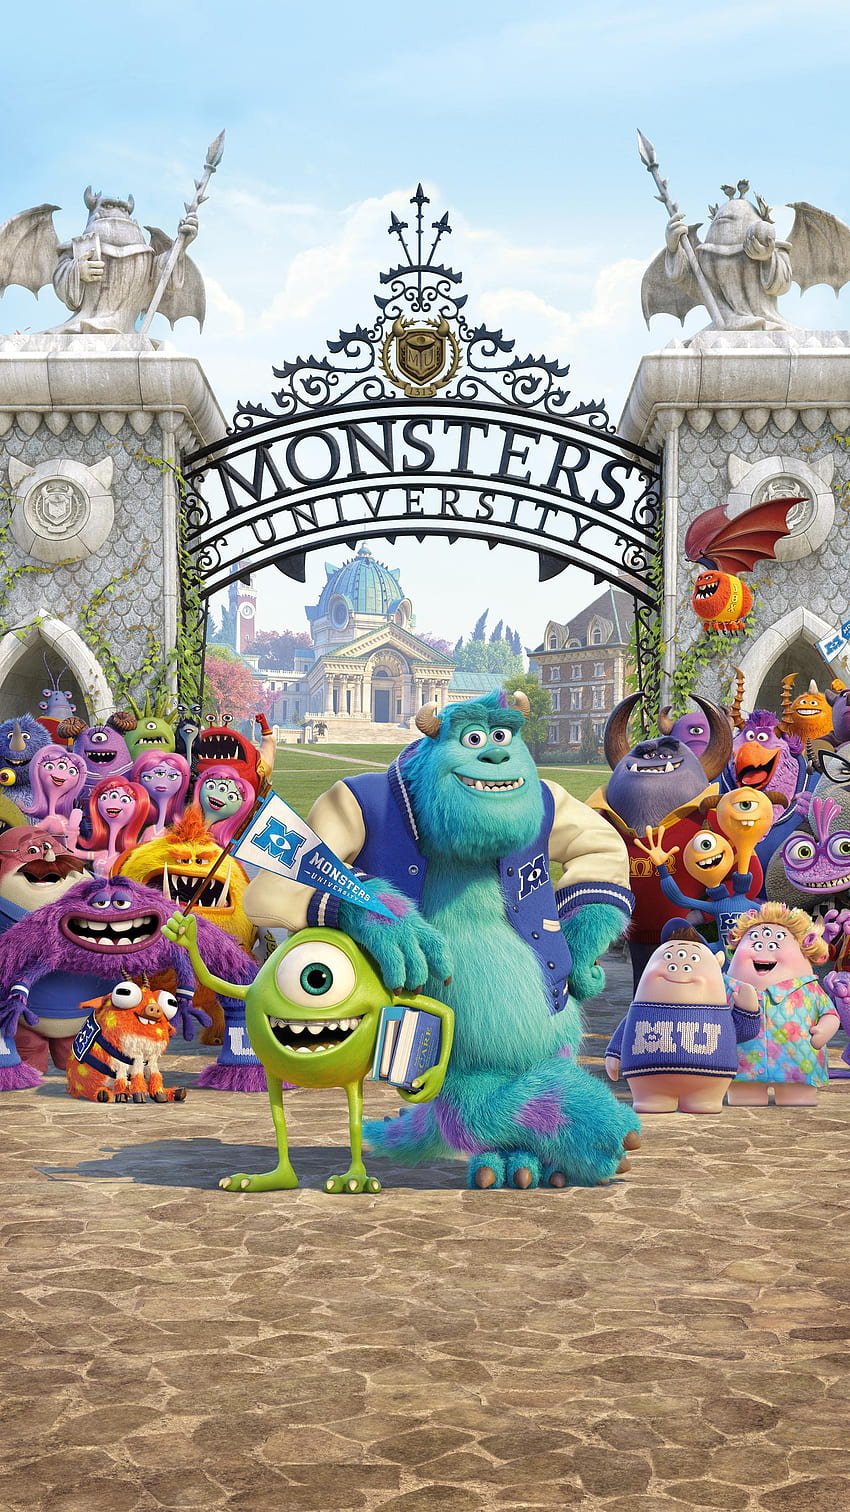 Monsters University (2013) Teléfono, Monsters Inc fondo de pantalla del teléfono